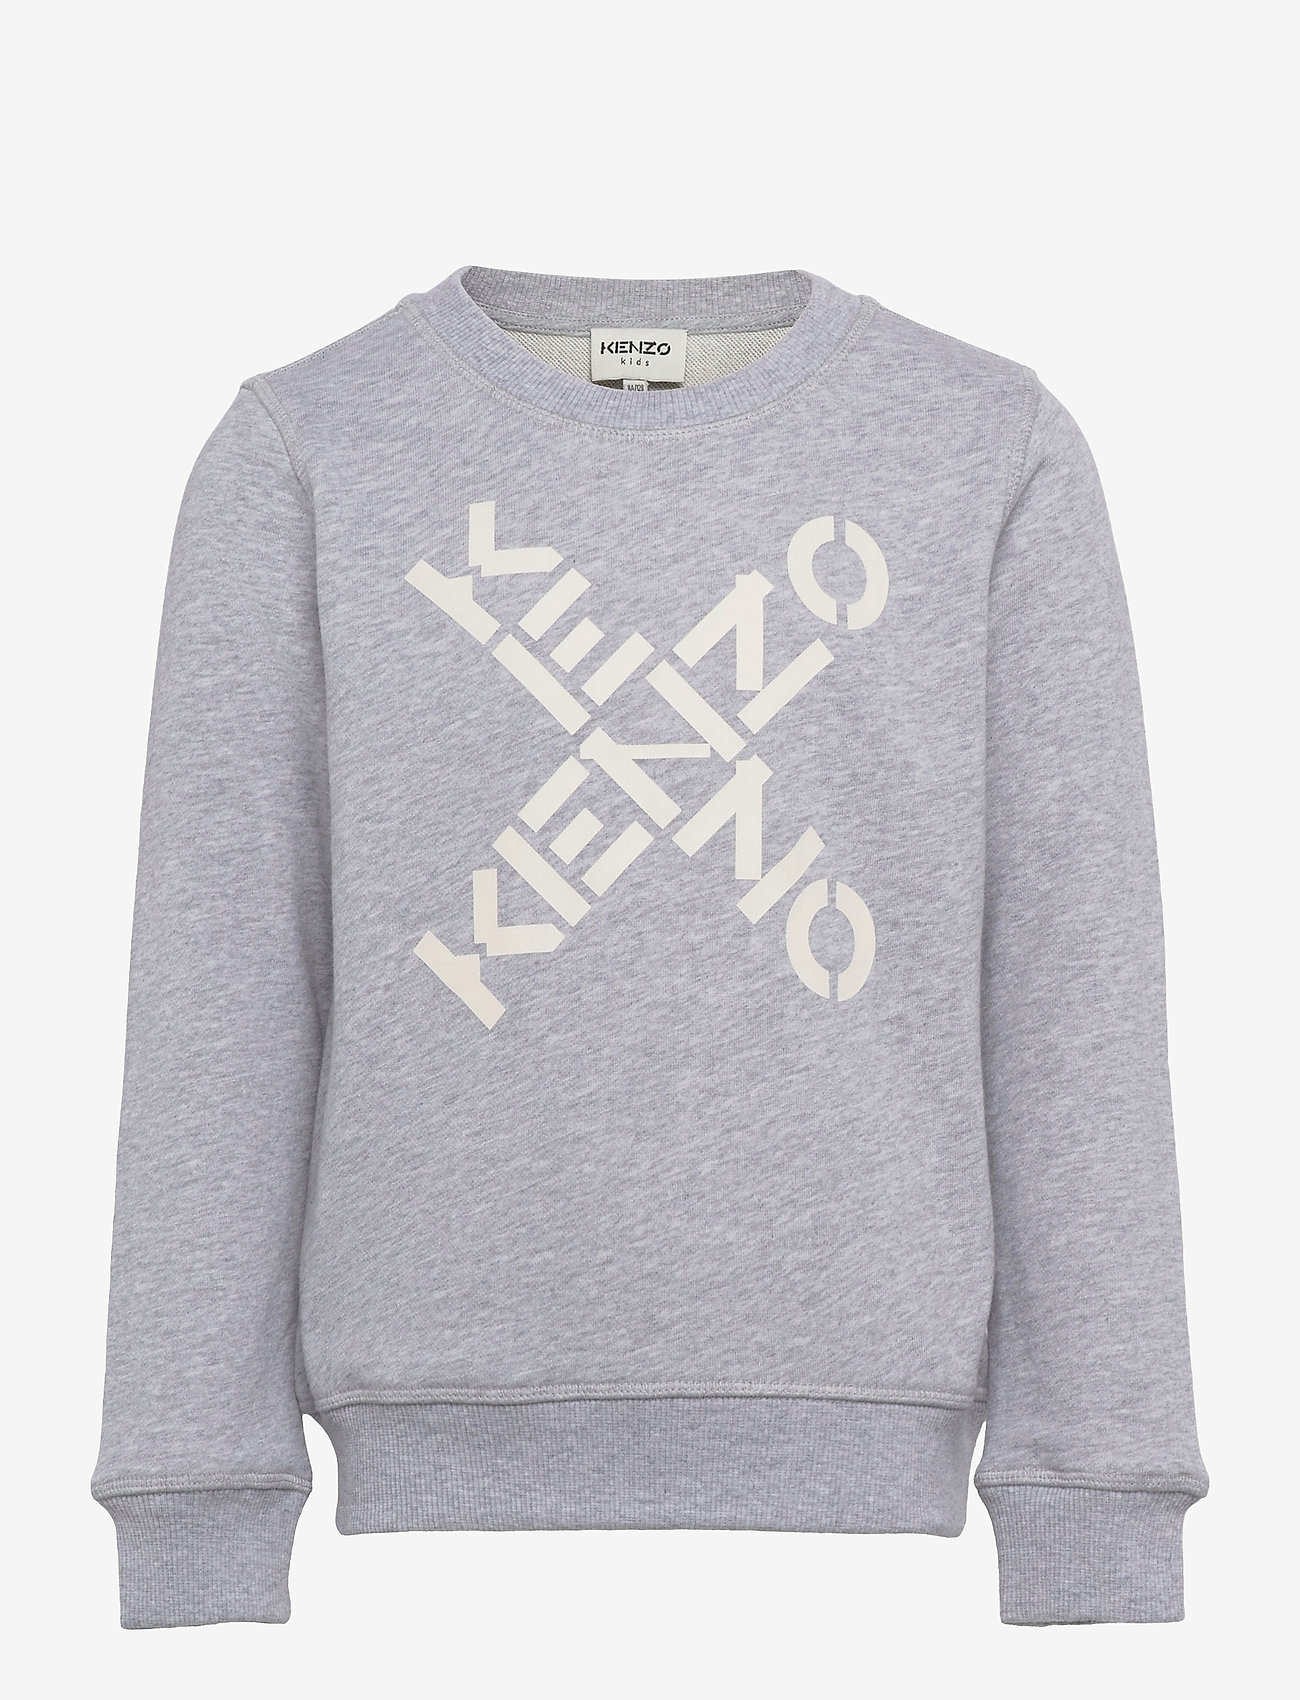 Kenzo Sweatshirt - Sweatshirts | Boozt.com